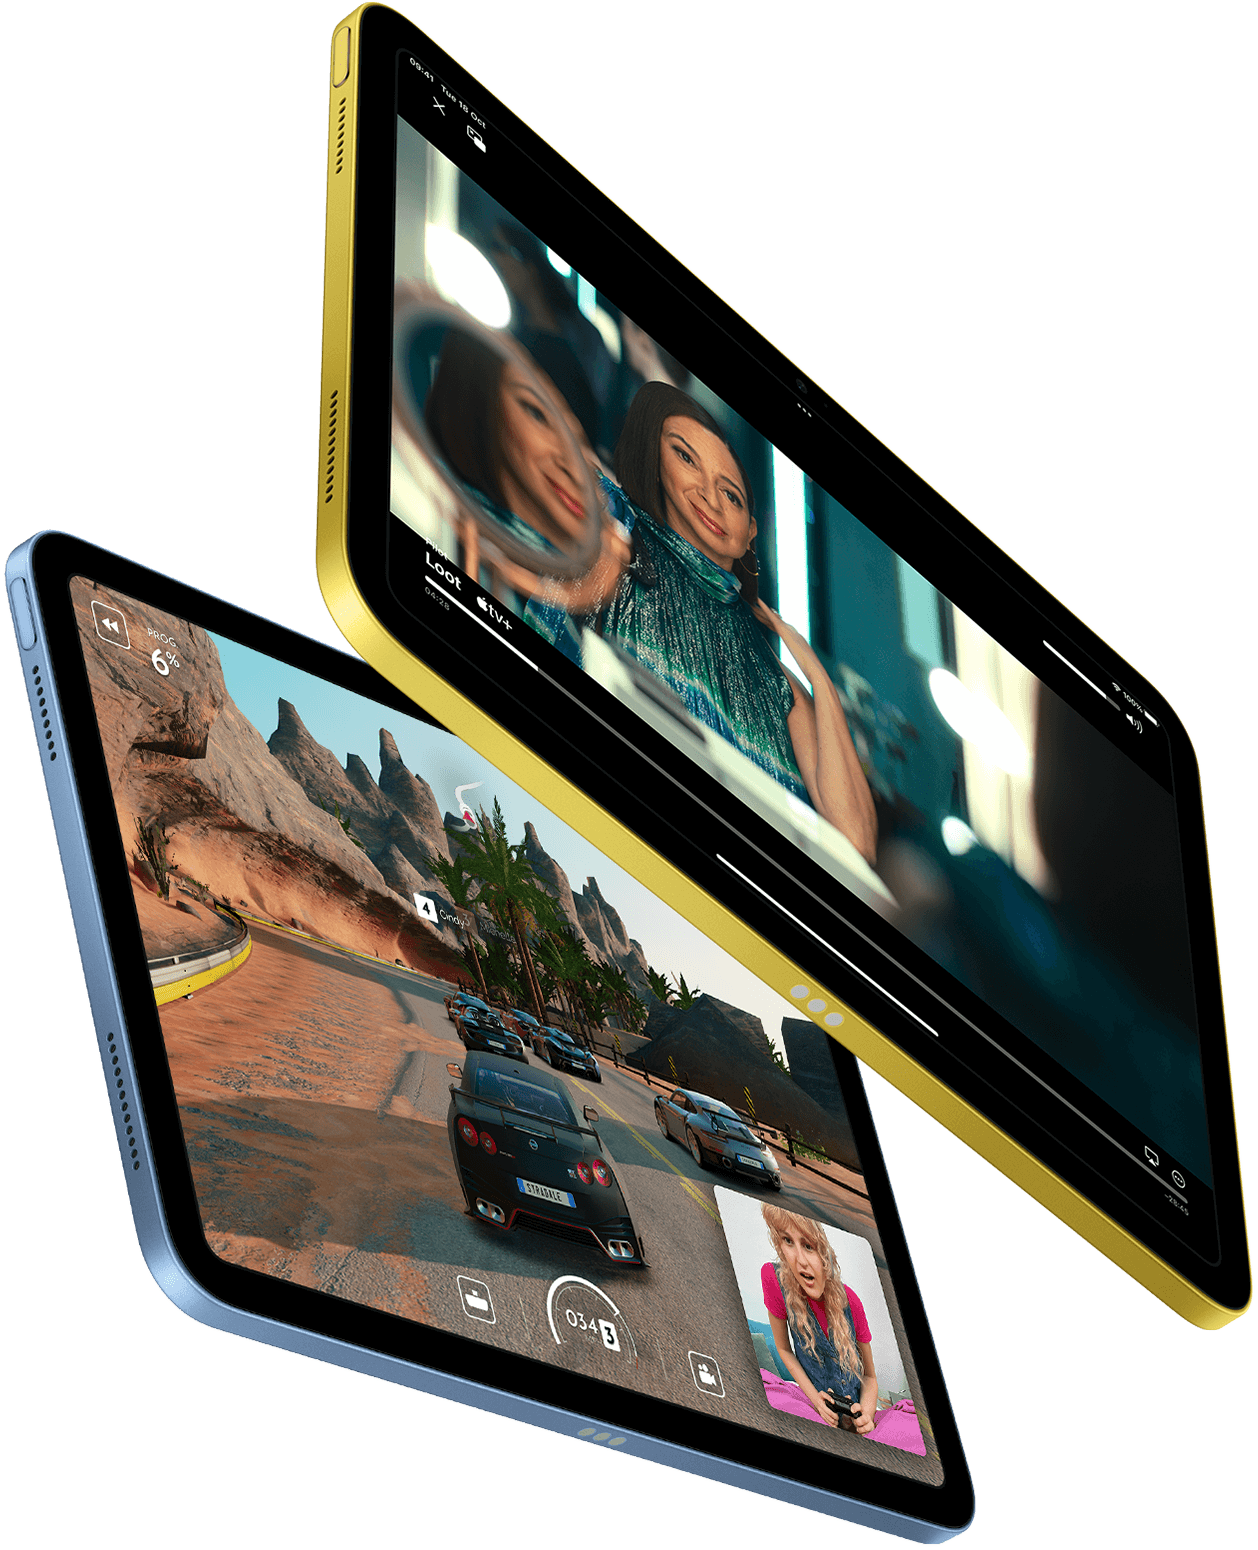 Showcasing Apple TV+ and SharePlay gaming experience on iPad.